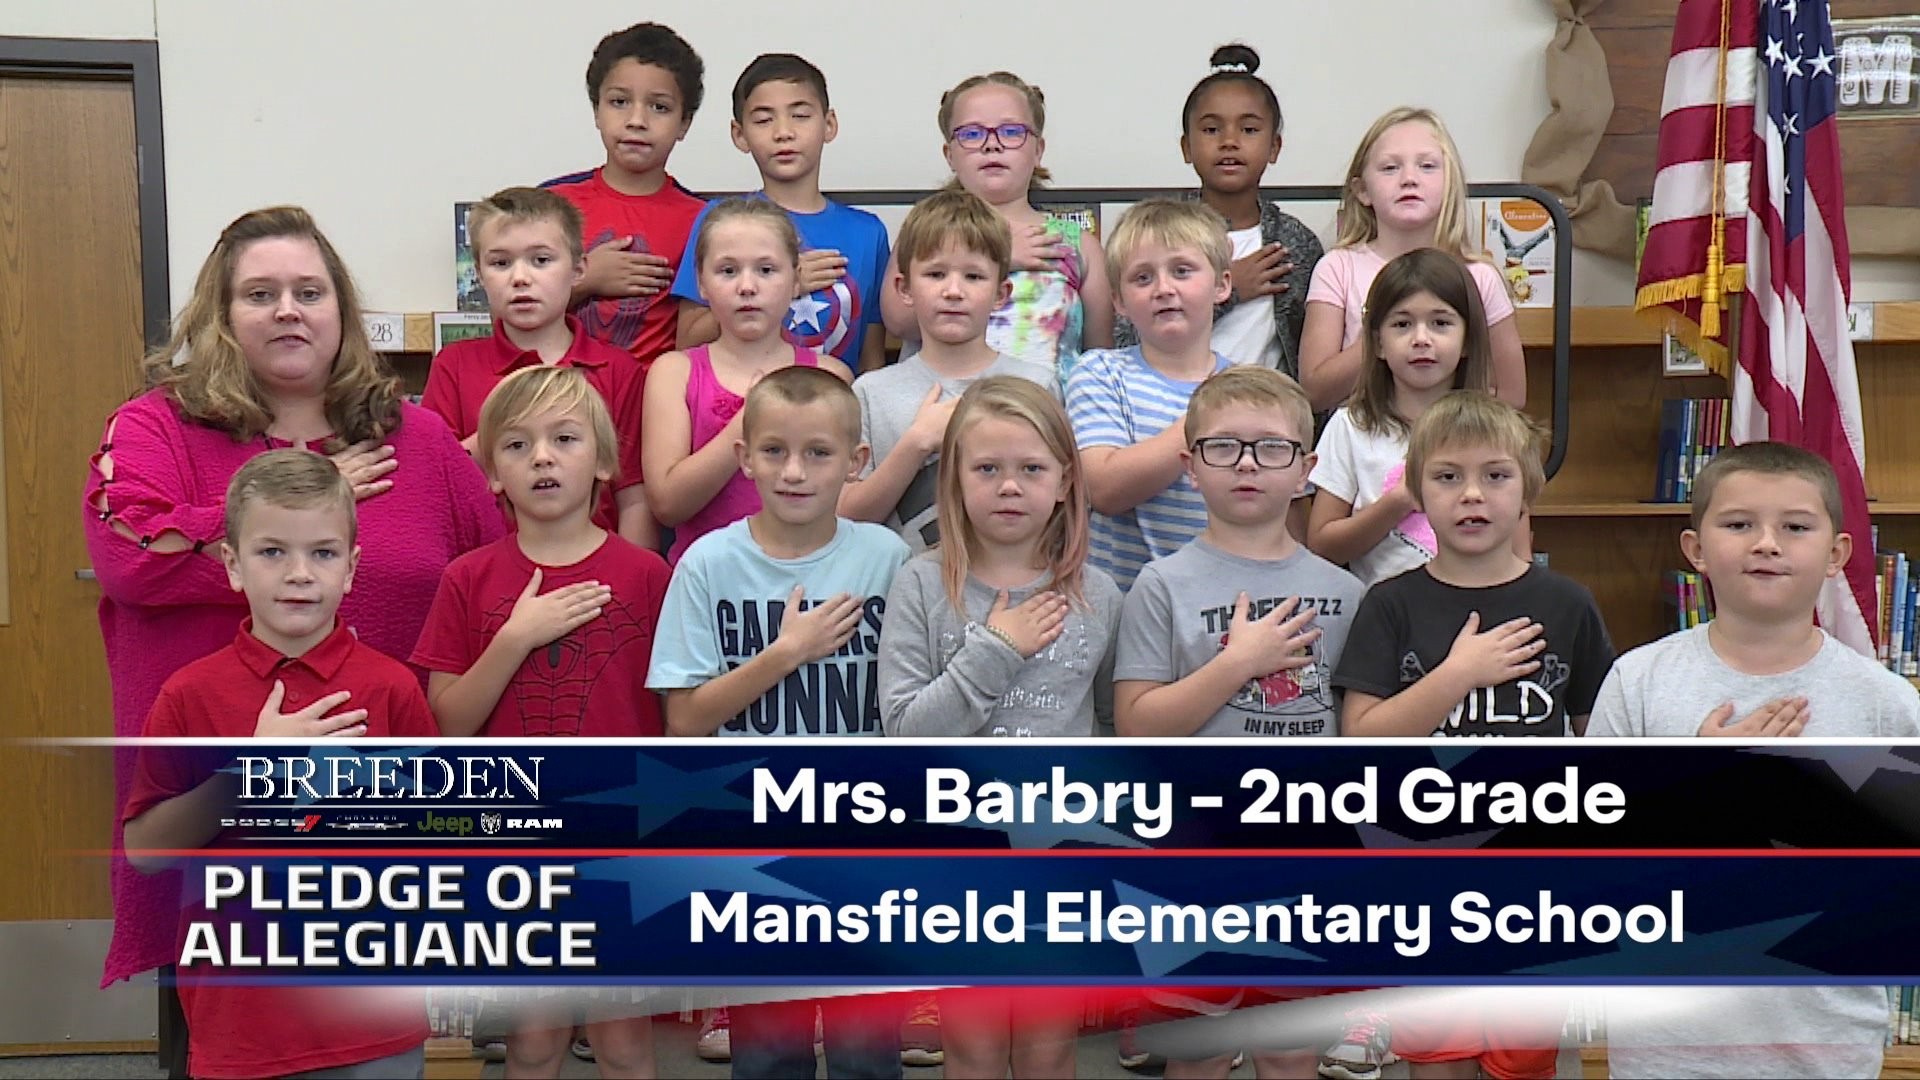 Mrs. Barbry 2nd Grade Mansfield Elementary School